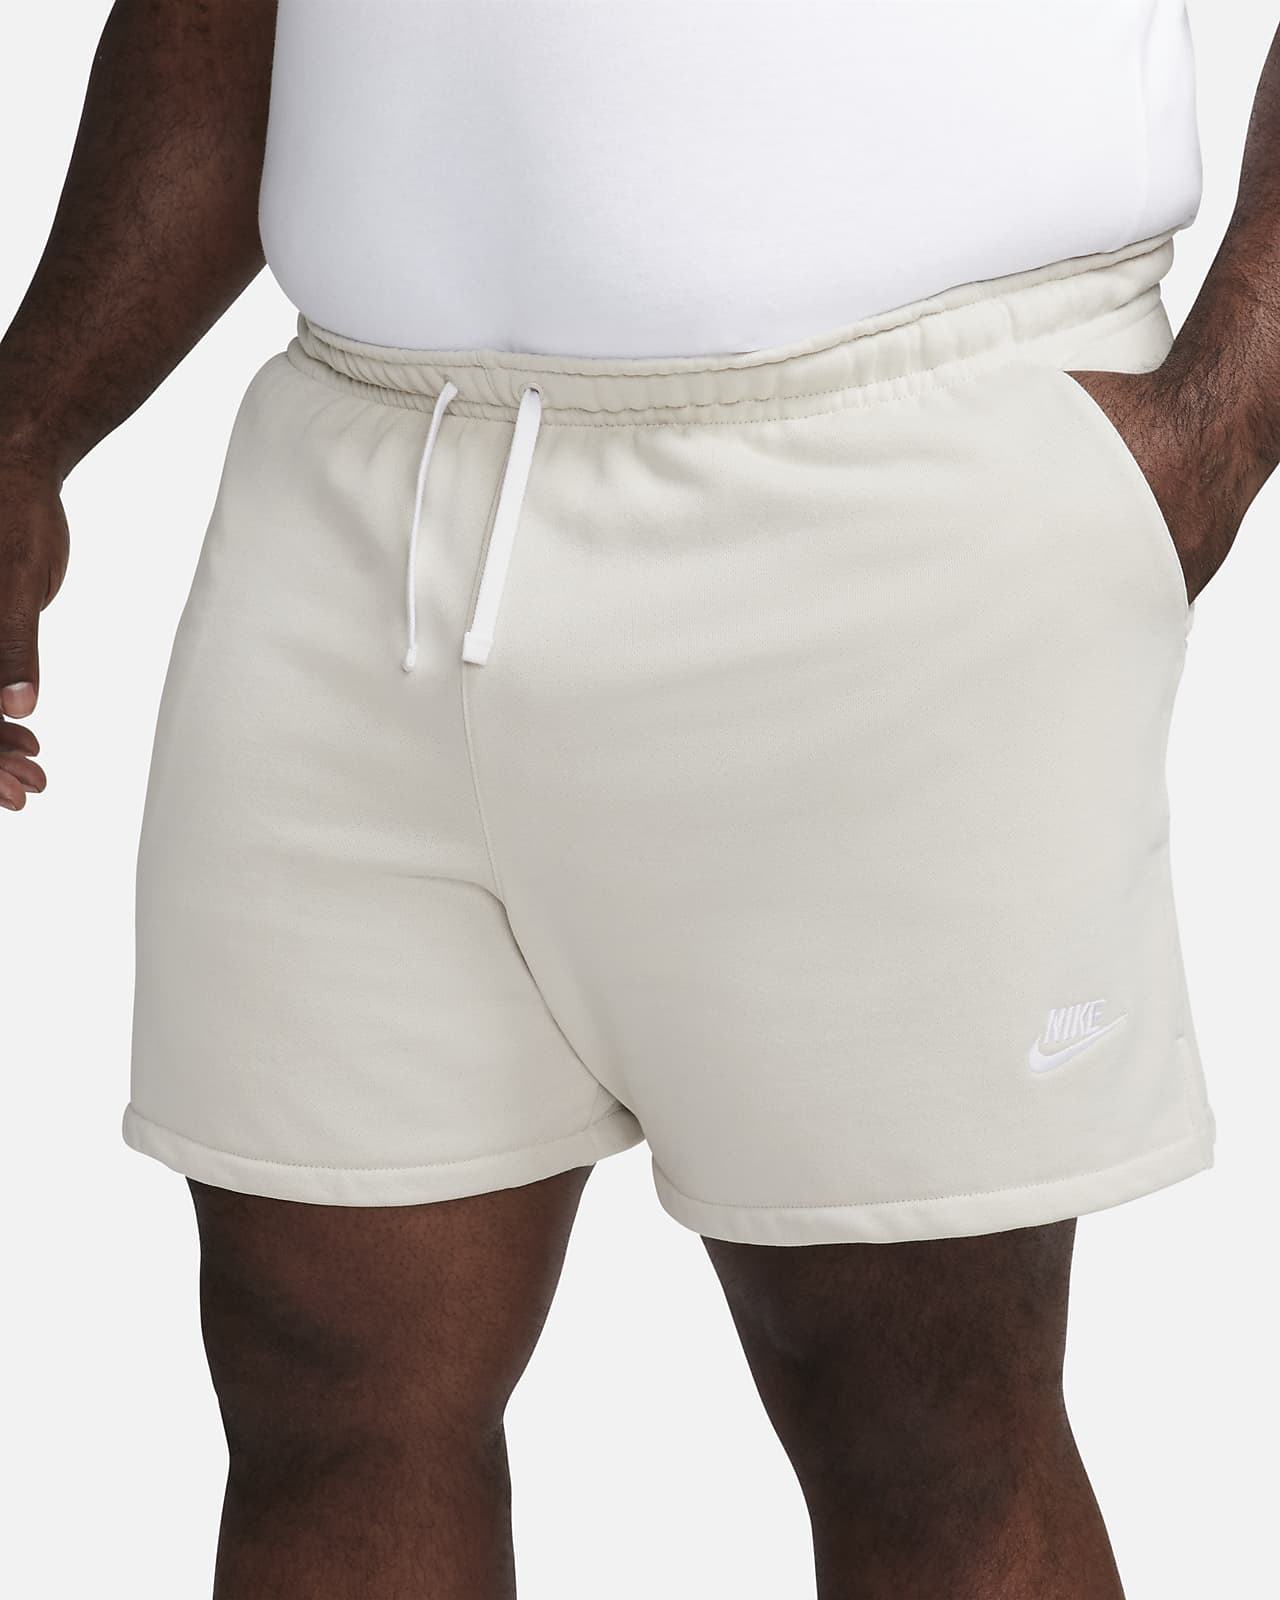 PURE CHAMP Mens Shorts 3 PK Tech Fleece Cotton Casual Lounge Sweat Gym  Shorts fo